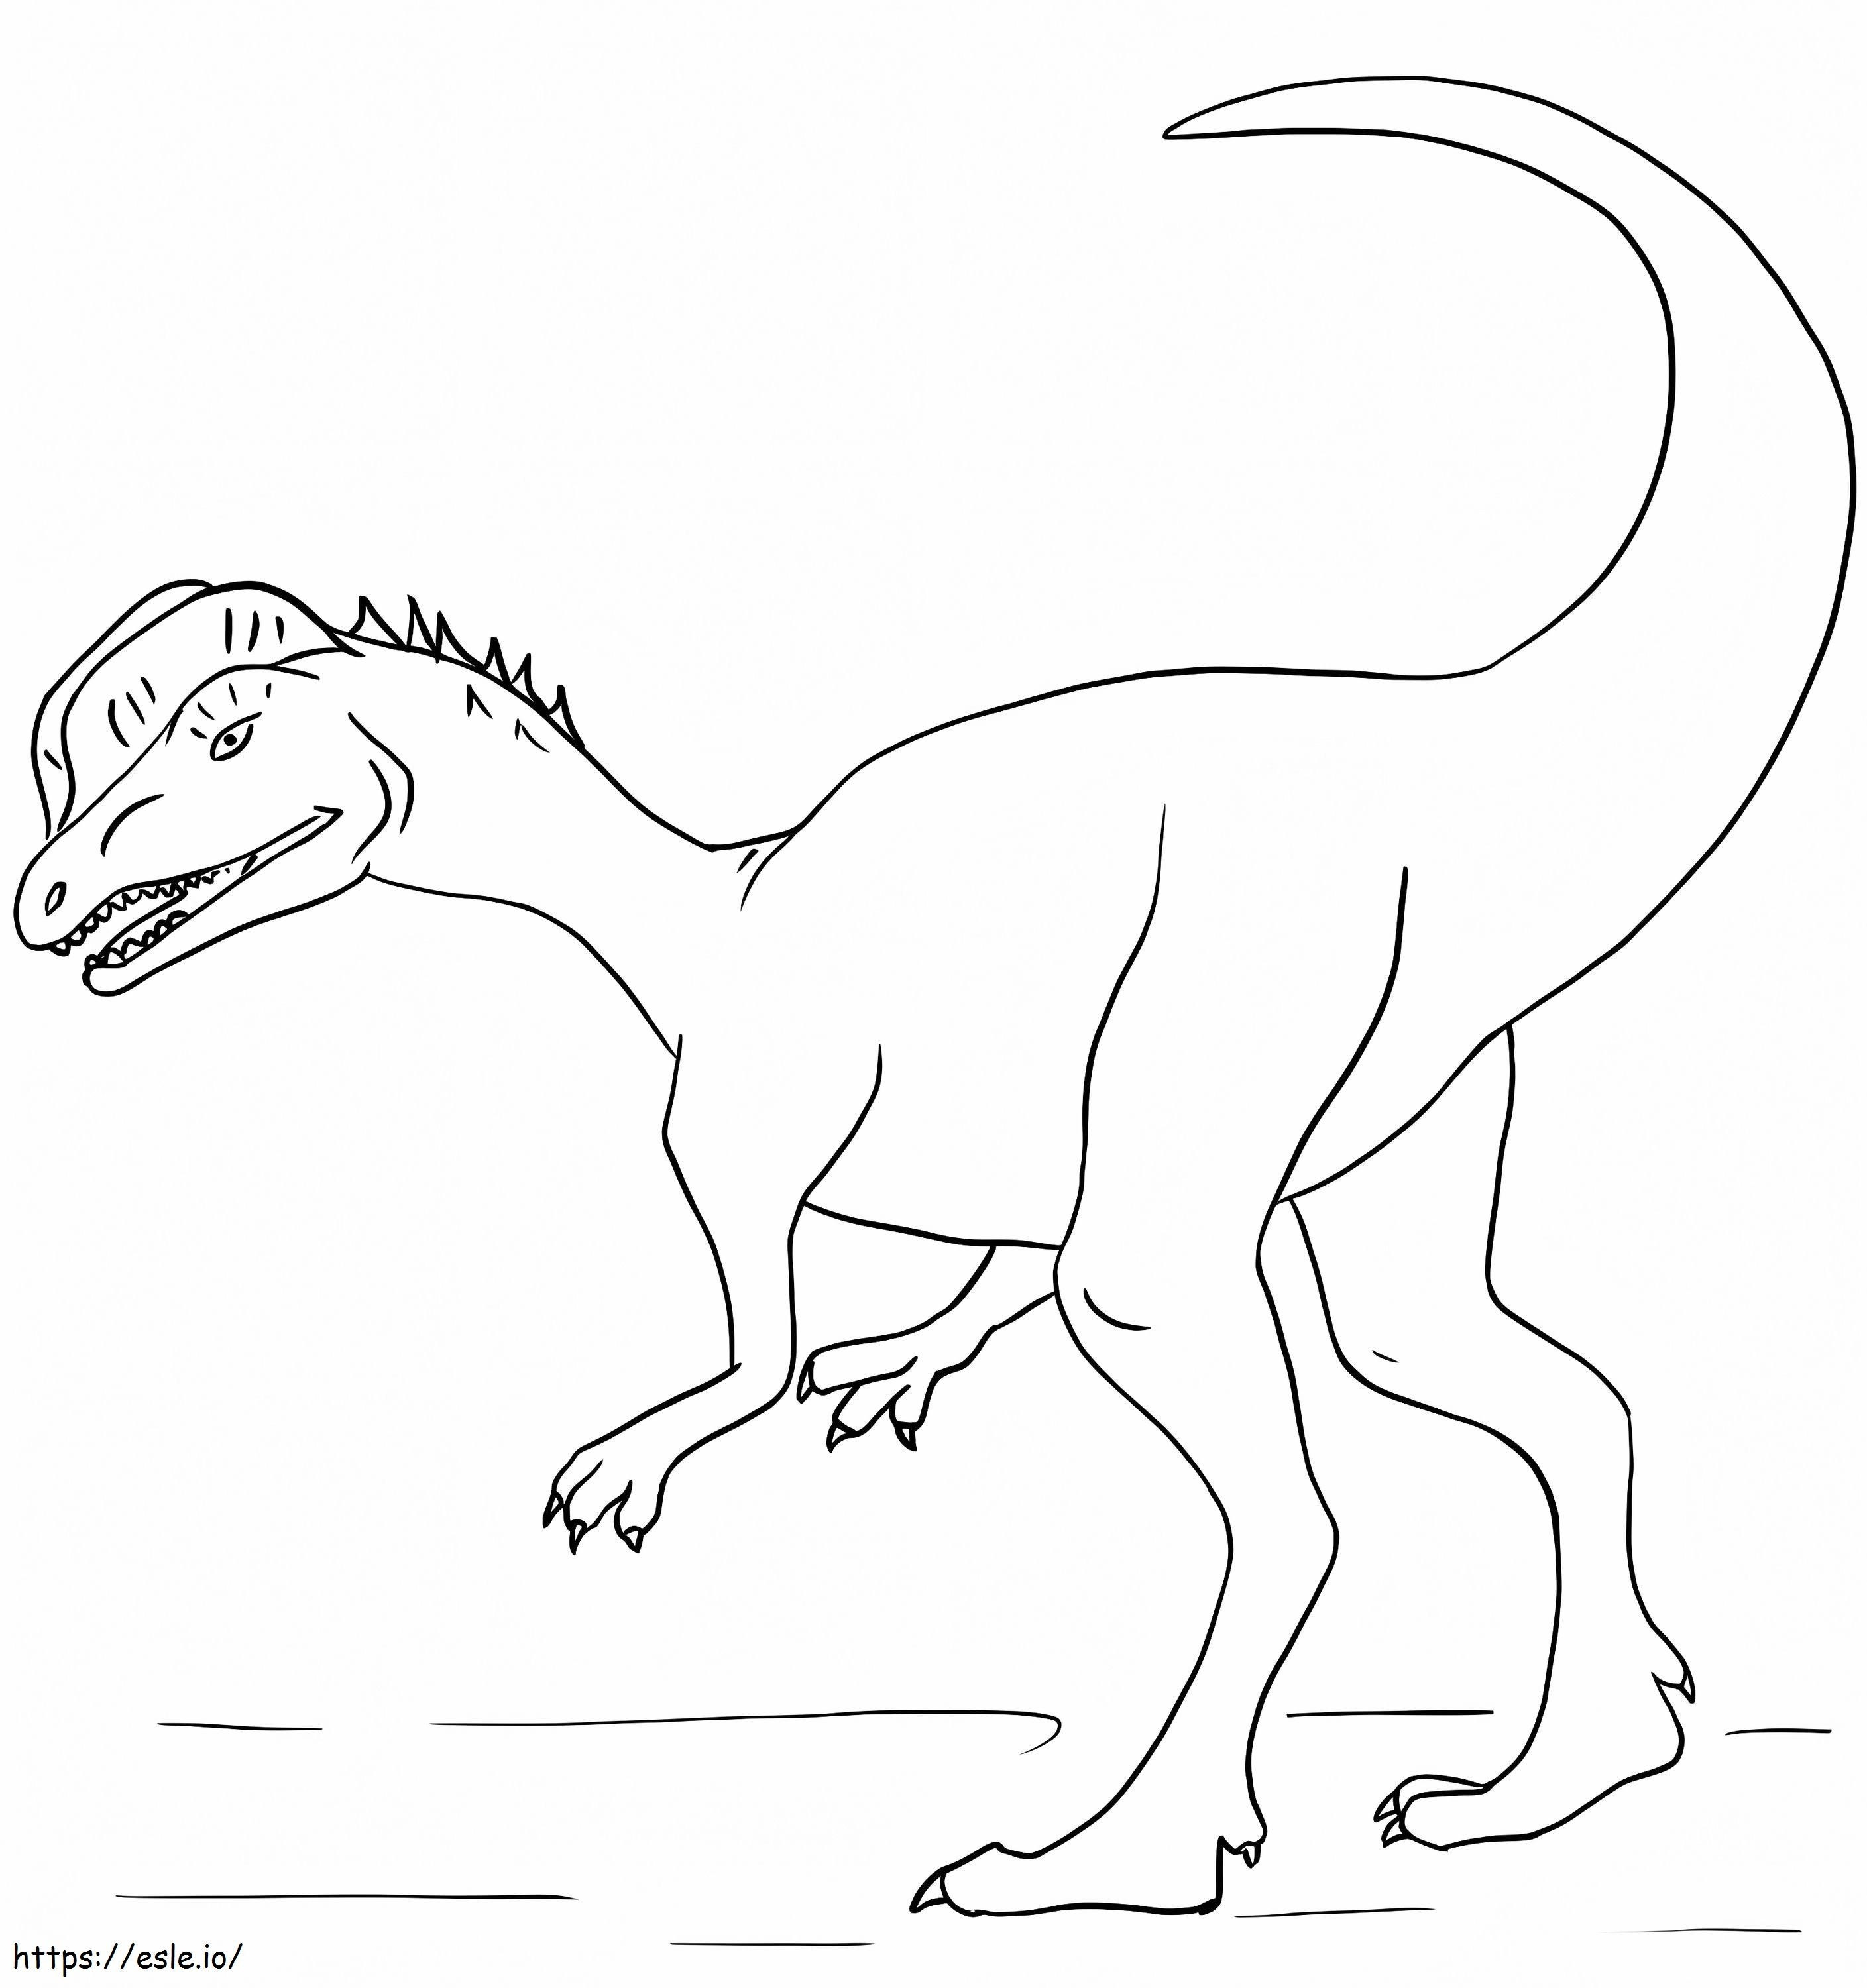 Dilophosaurus 1 coloring page